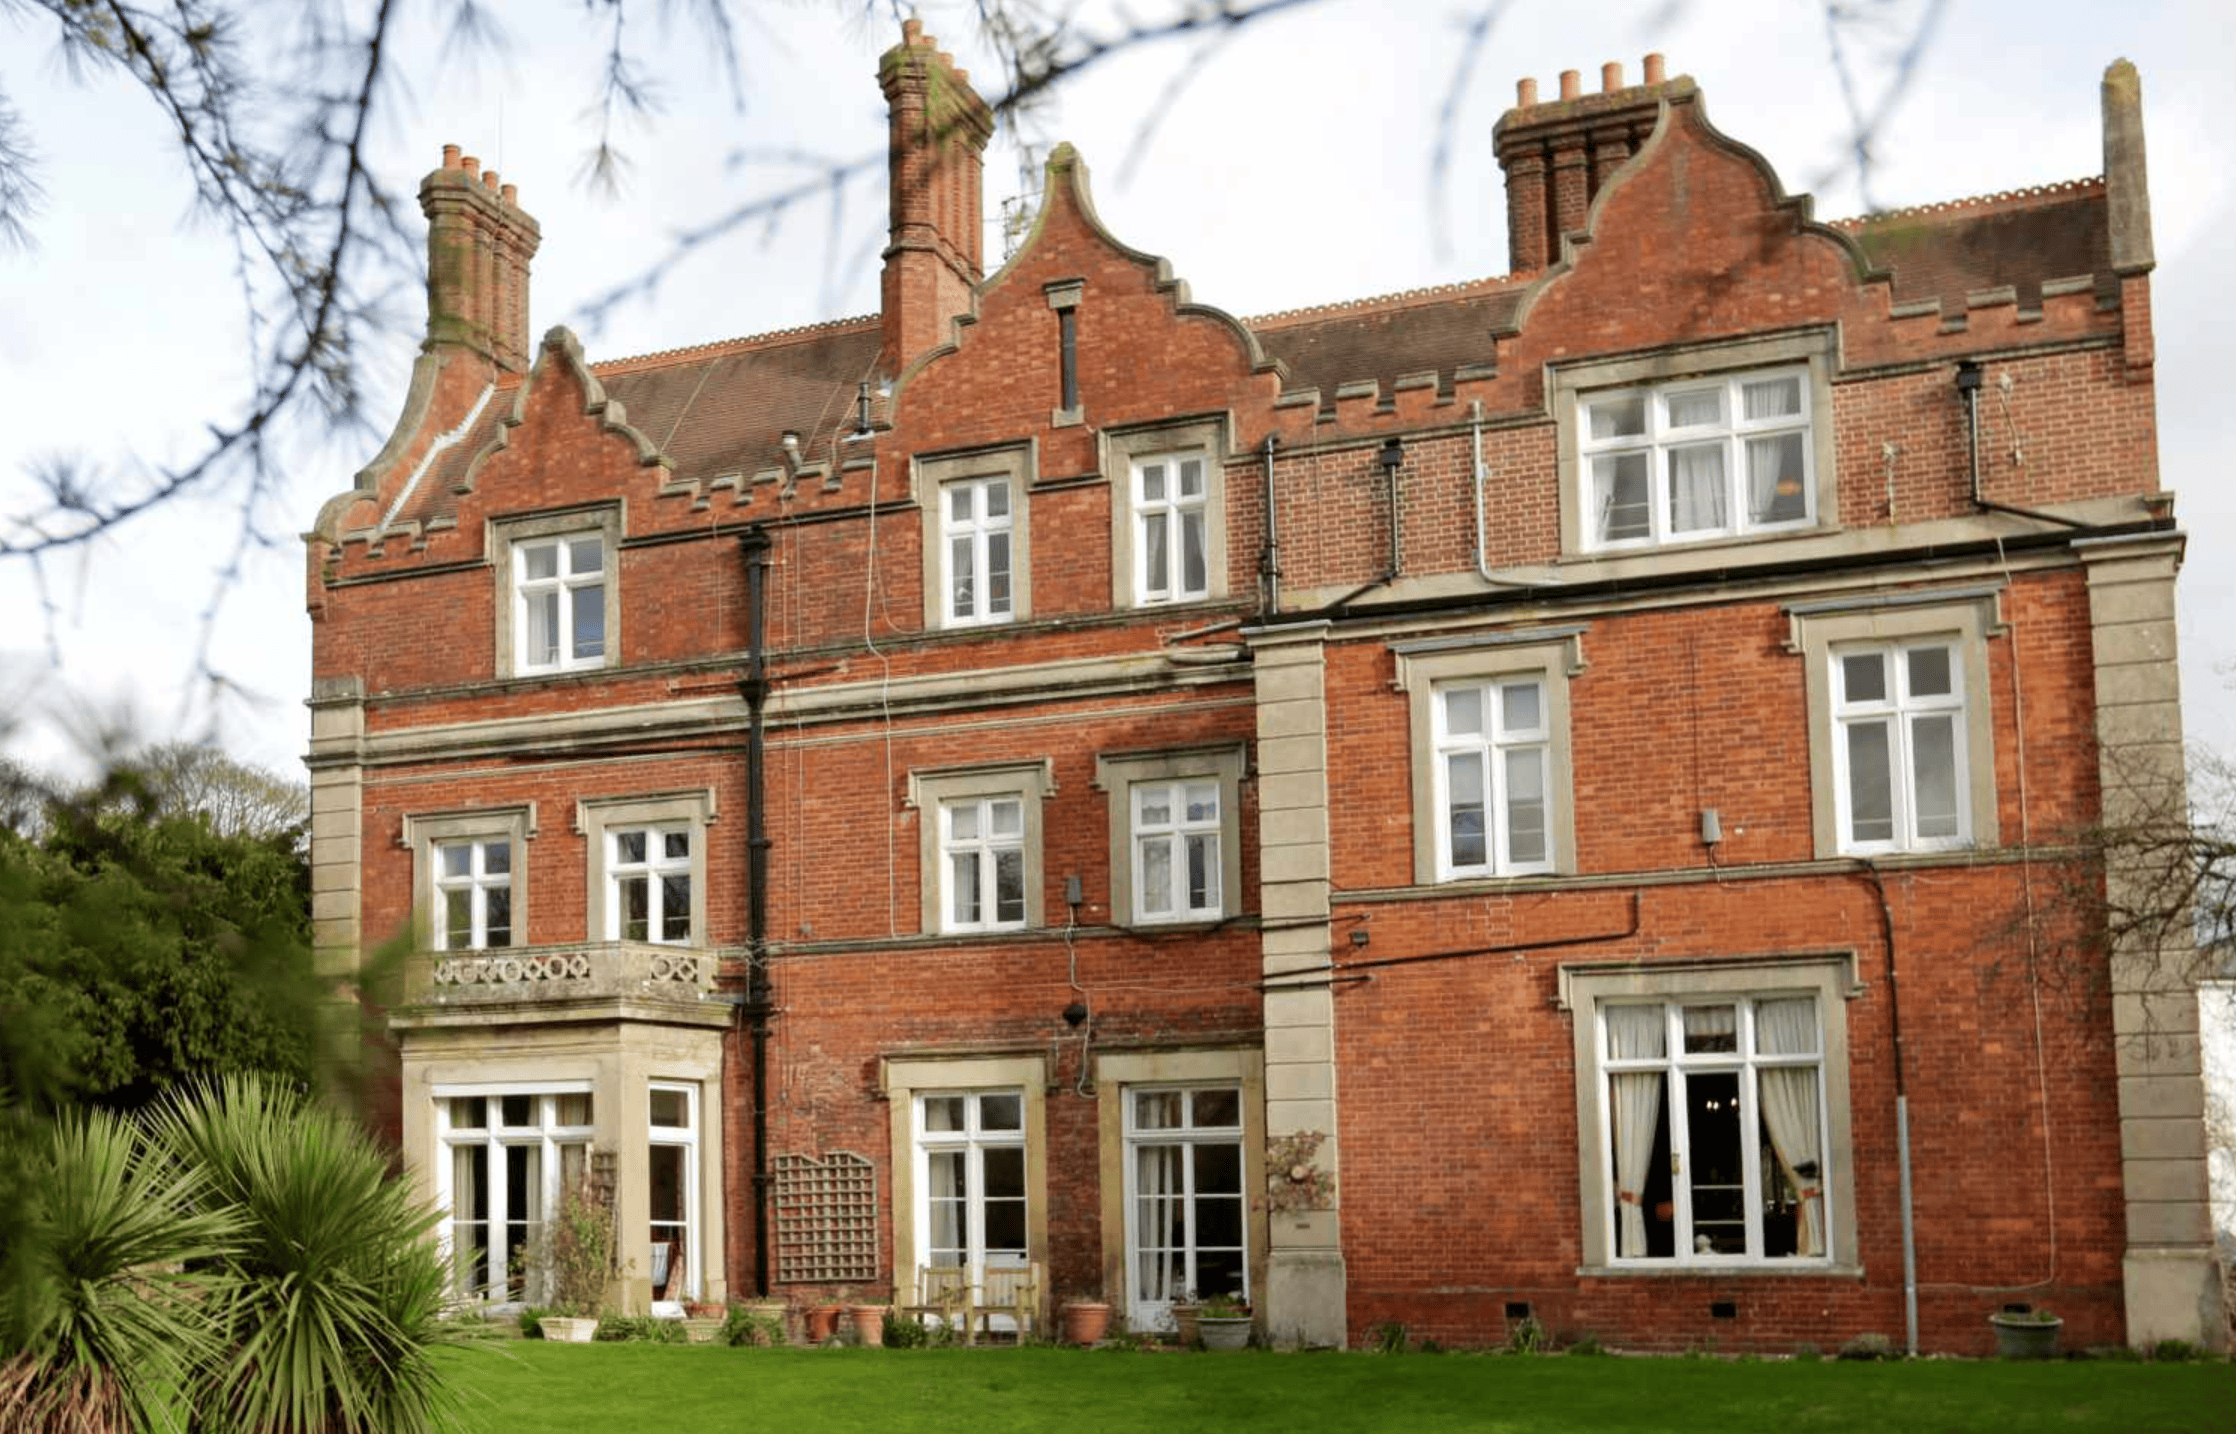 Exterior of Mount Ephraim House in Tunbridge Wells, Kent